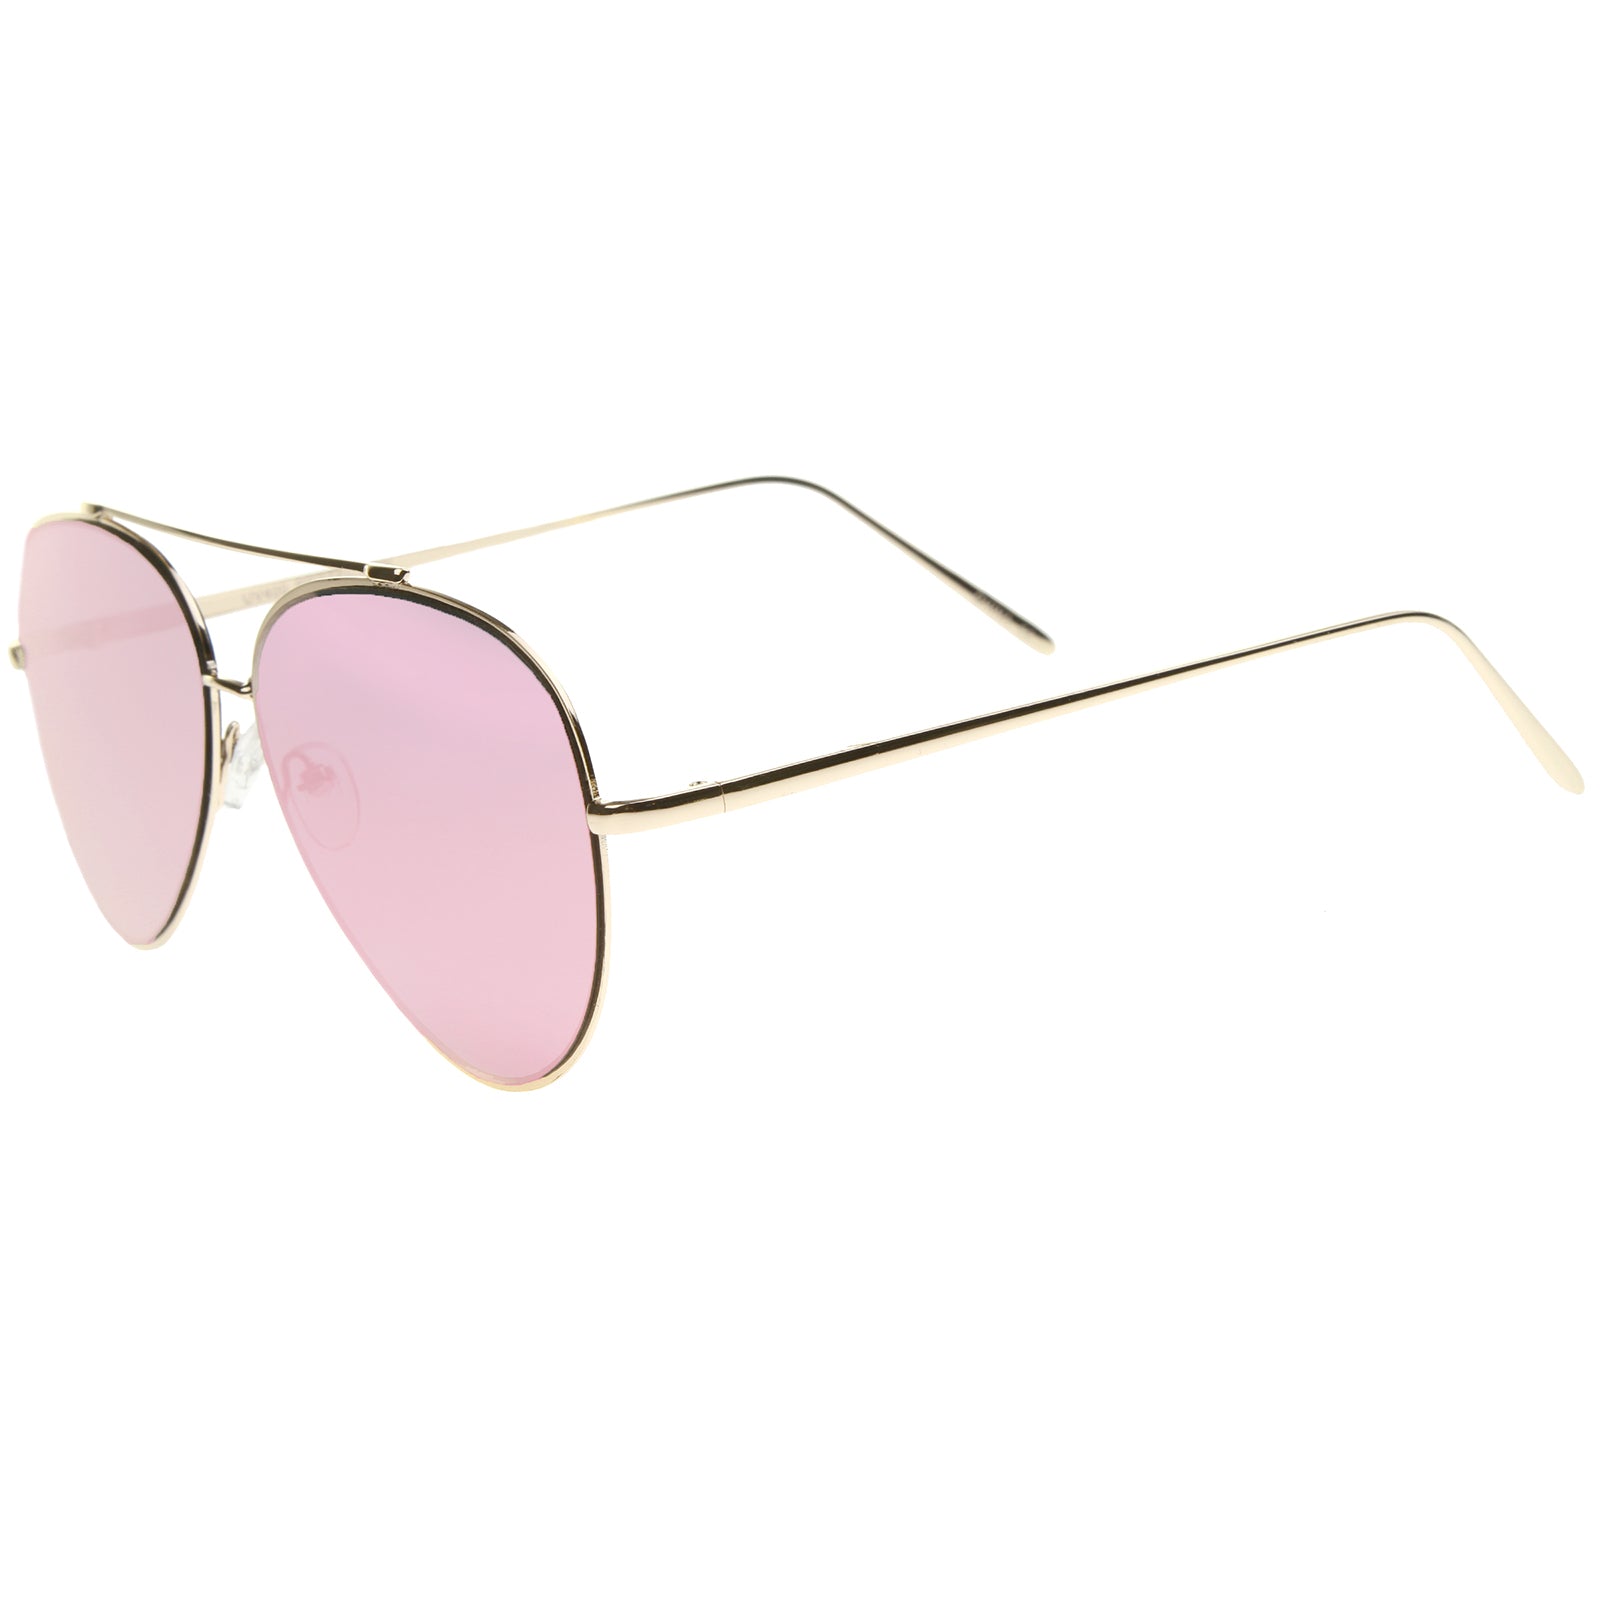 Gold to Pink Lens Fashion Aviator Sunglasses